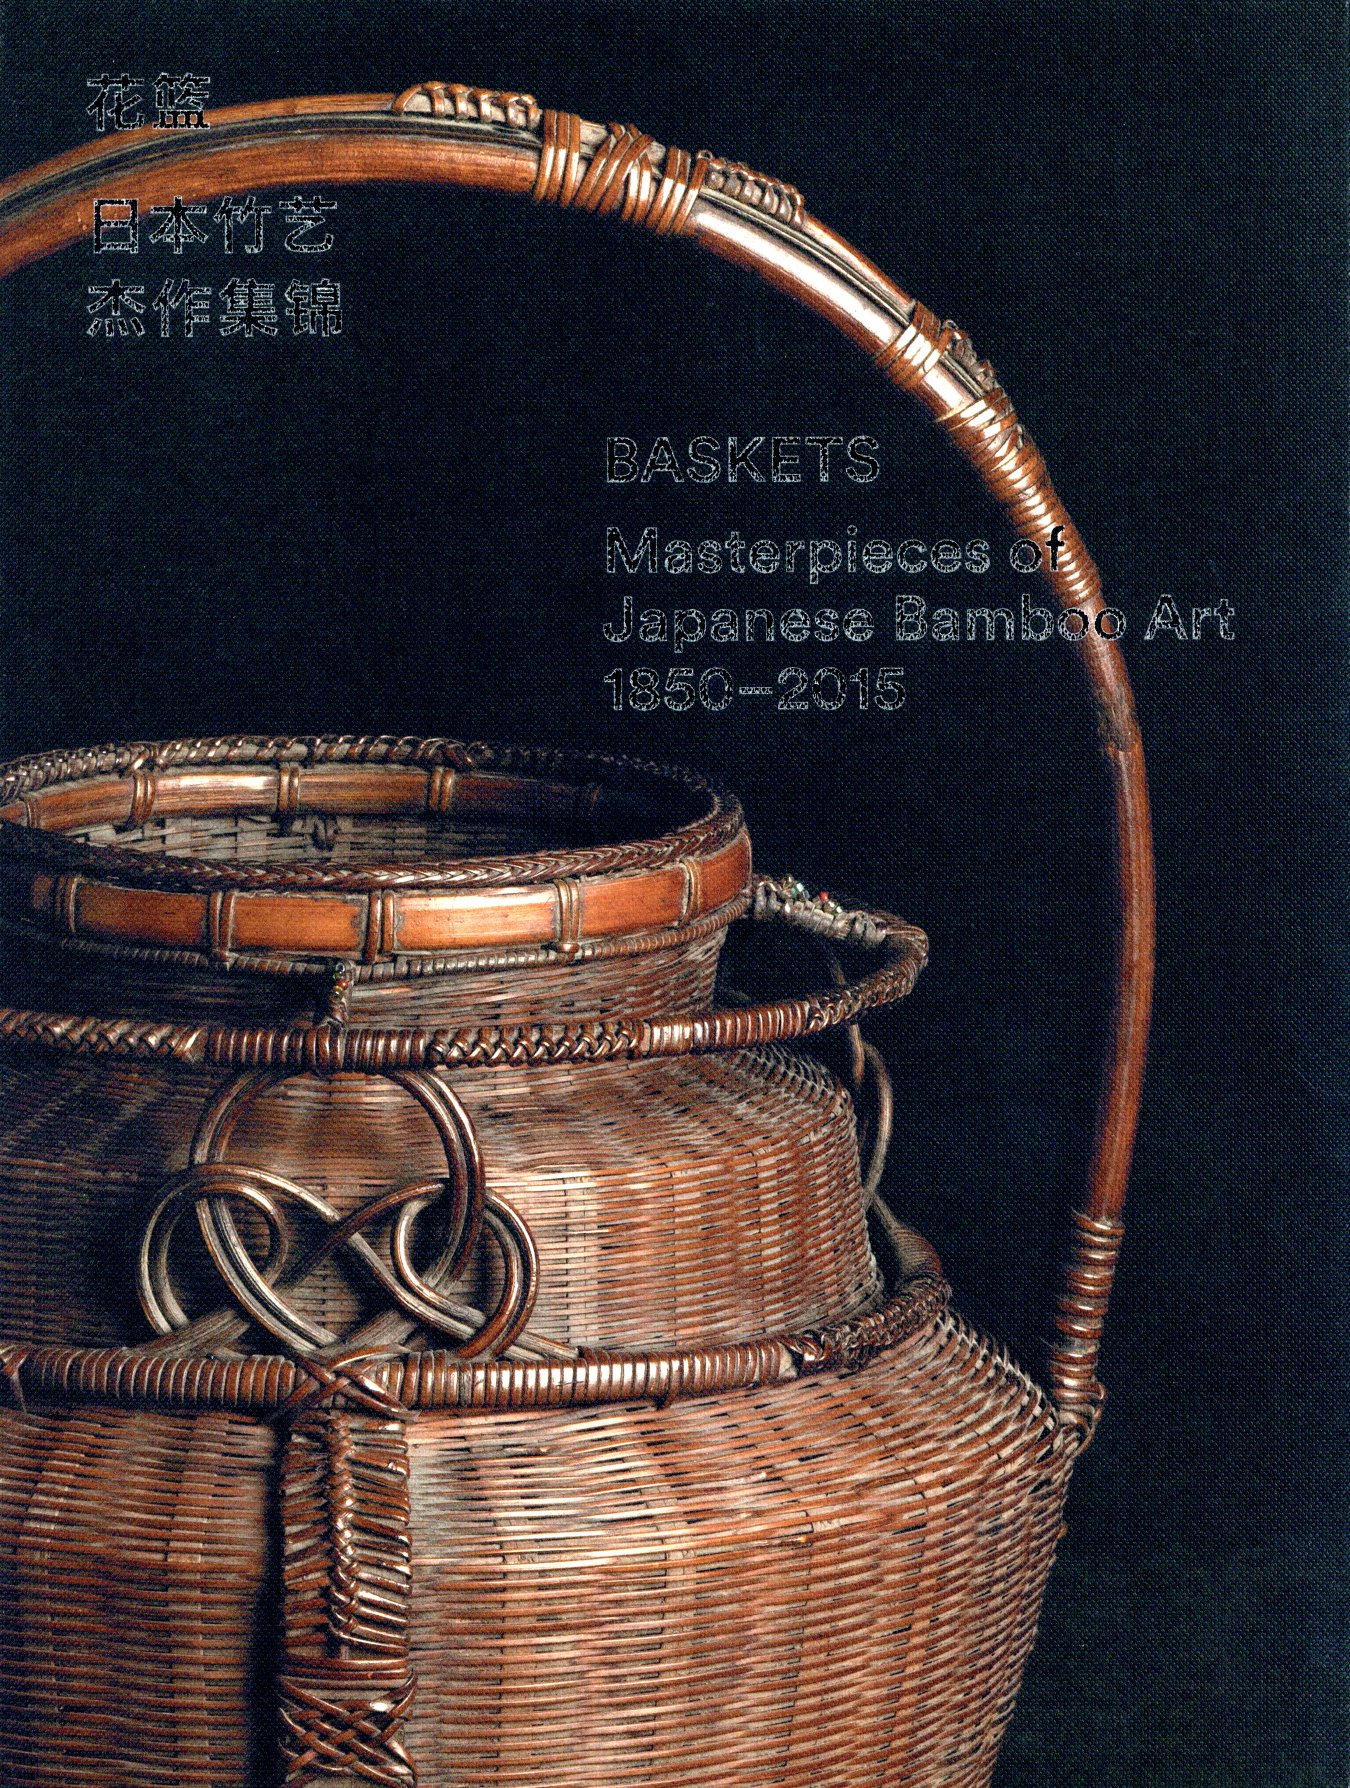 Baskets-Masterpieces-of-Japanese-Bamboo-Art-18502015-English-English-and-Japanese-Edition